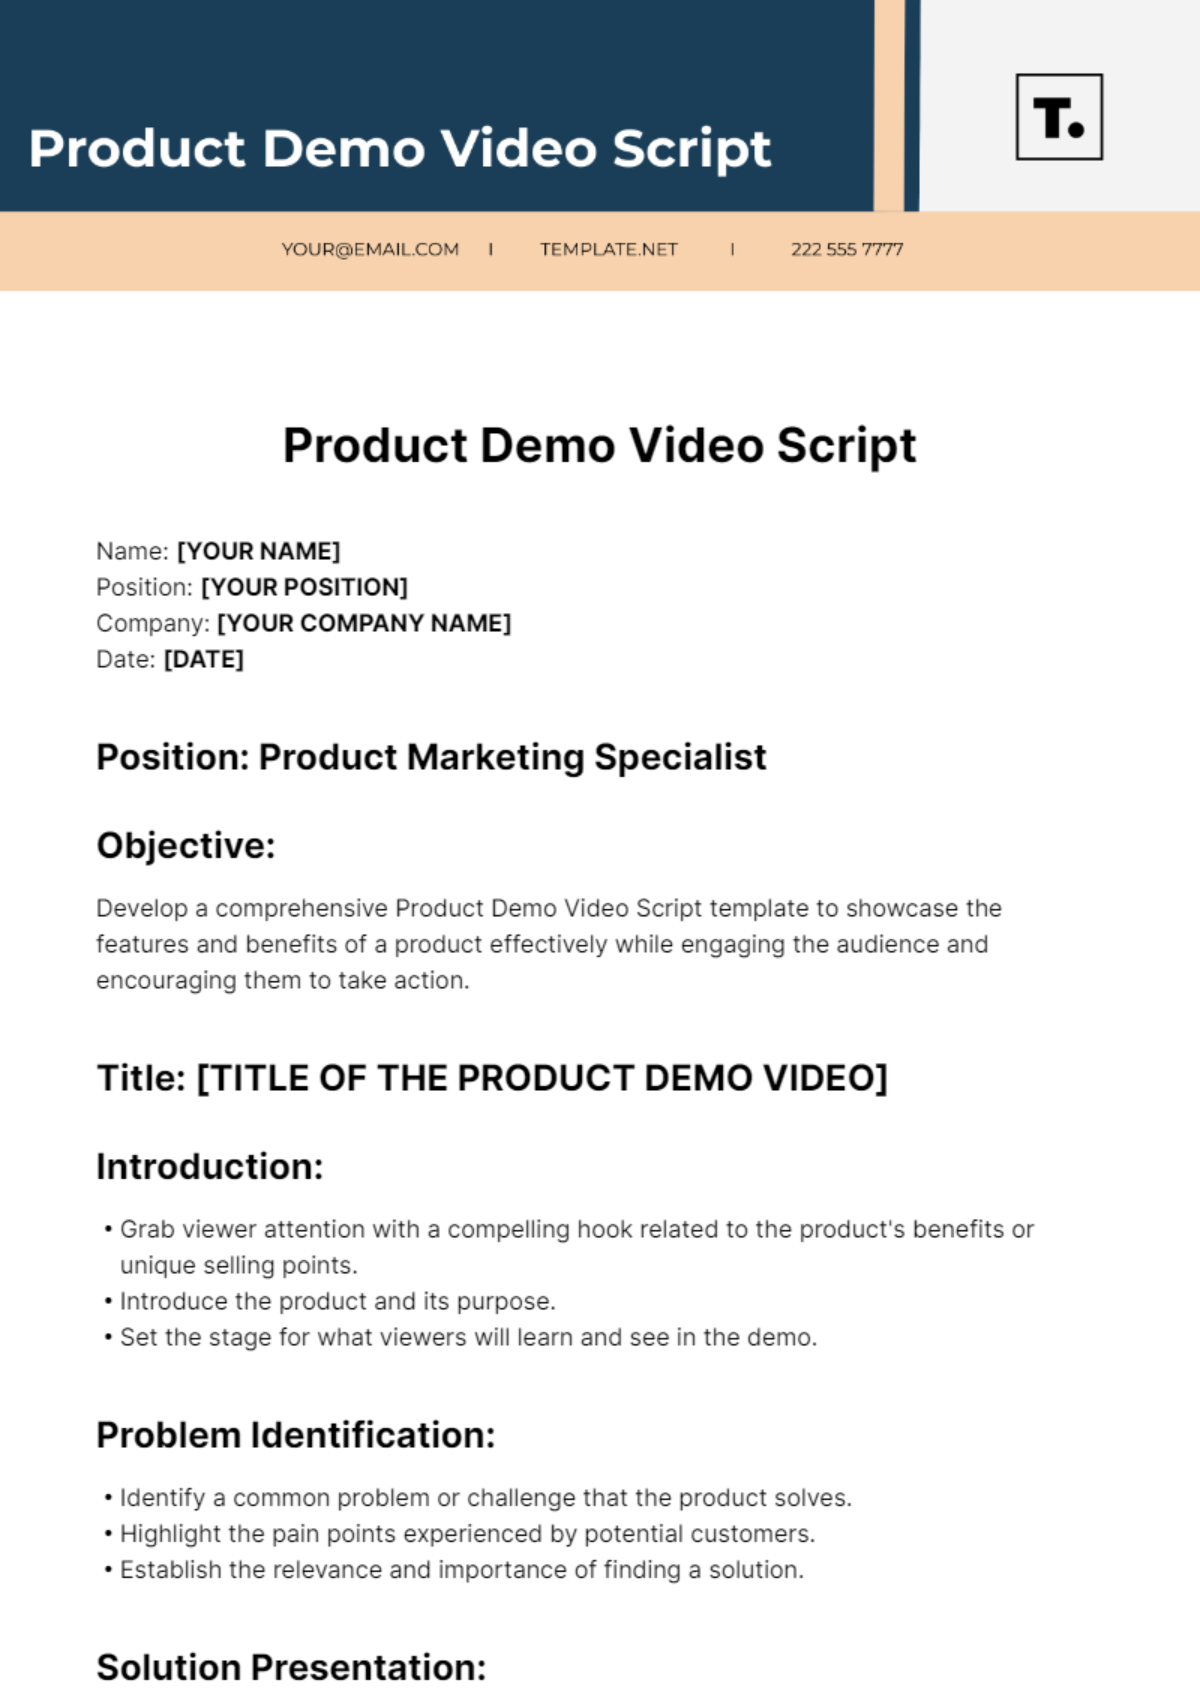 Product Demo Video Script template